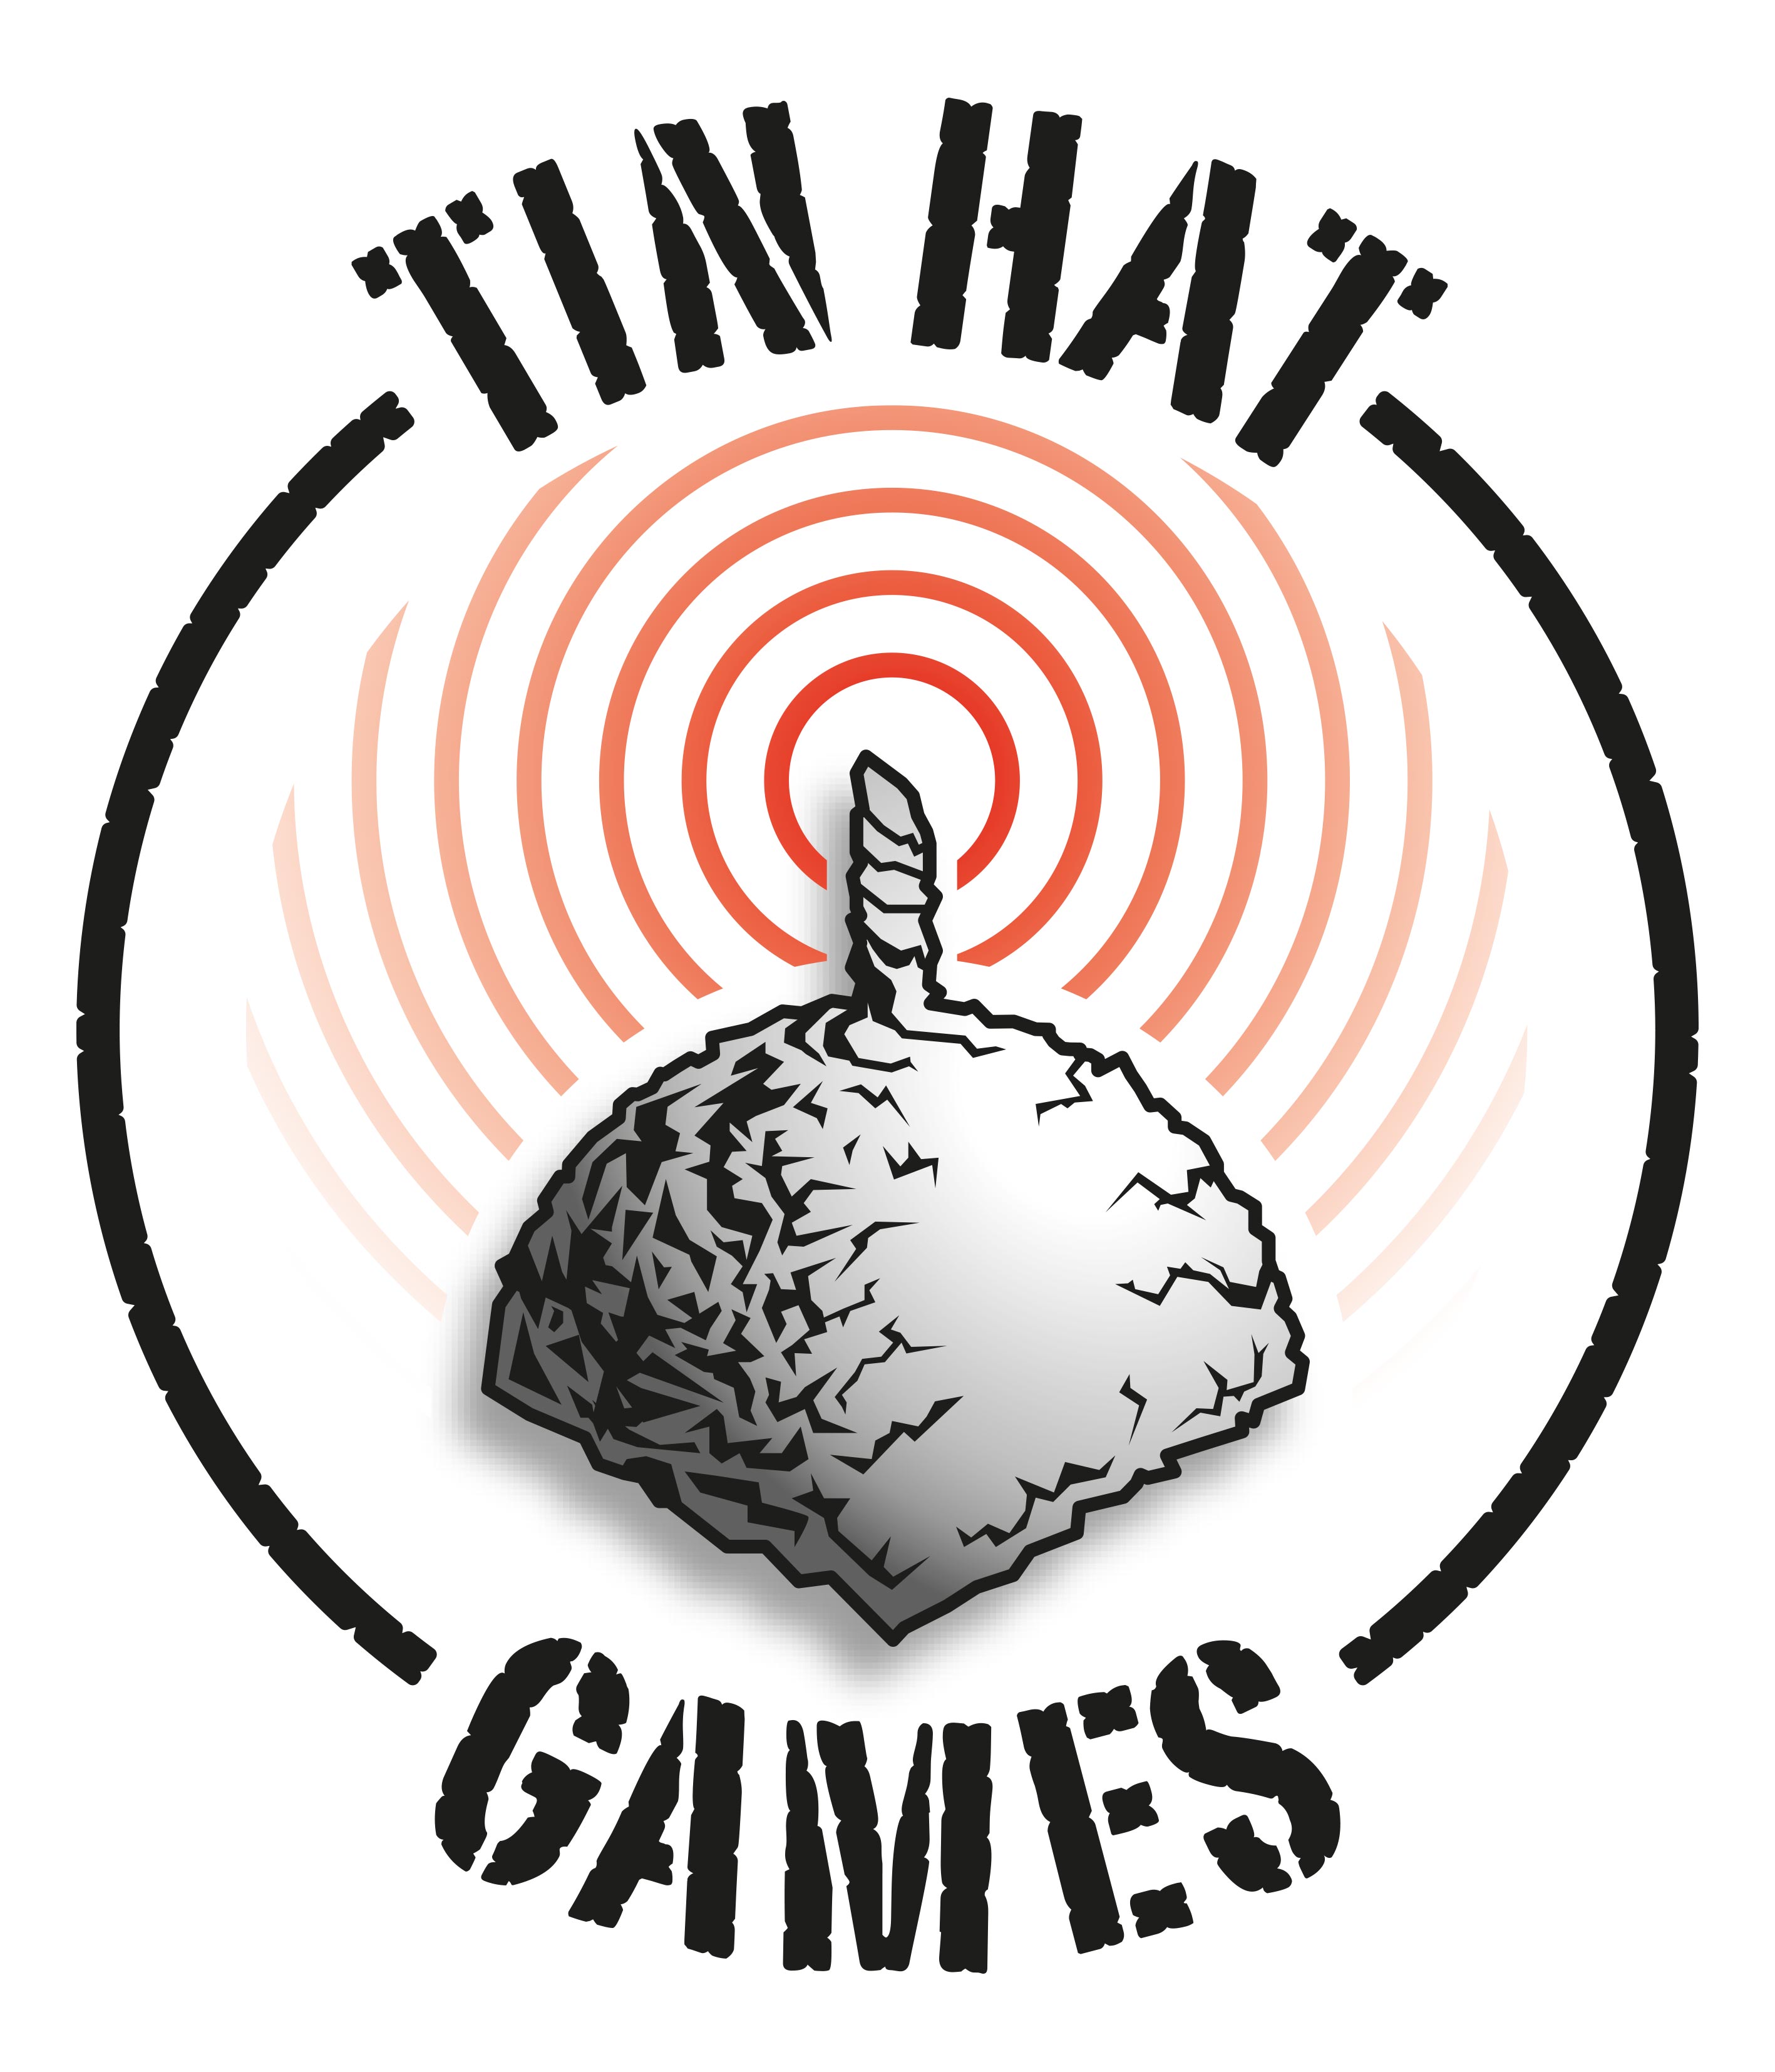 Tin Hat Games